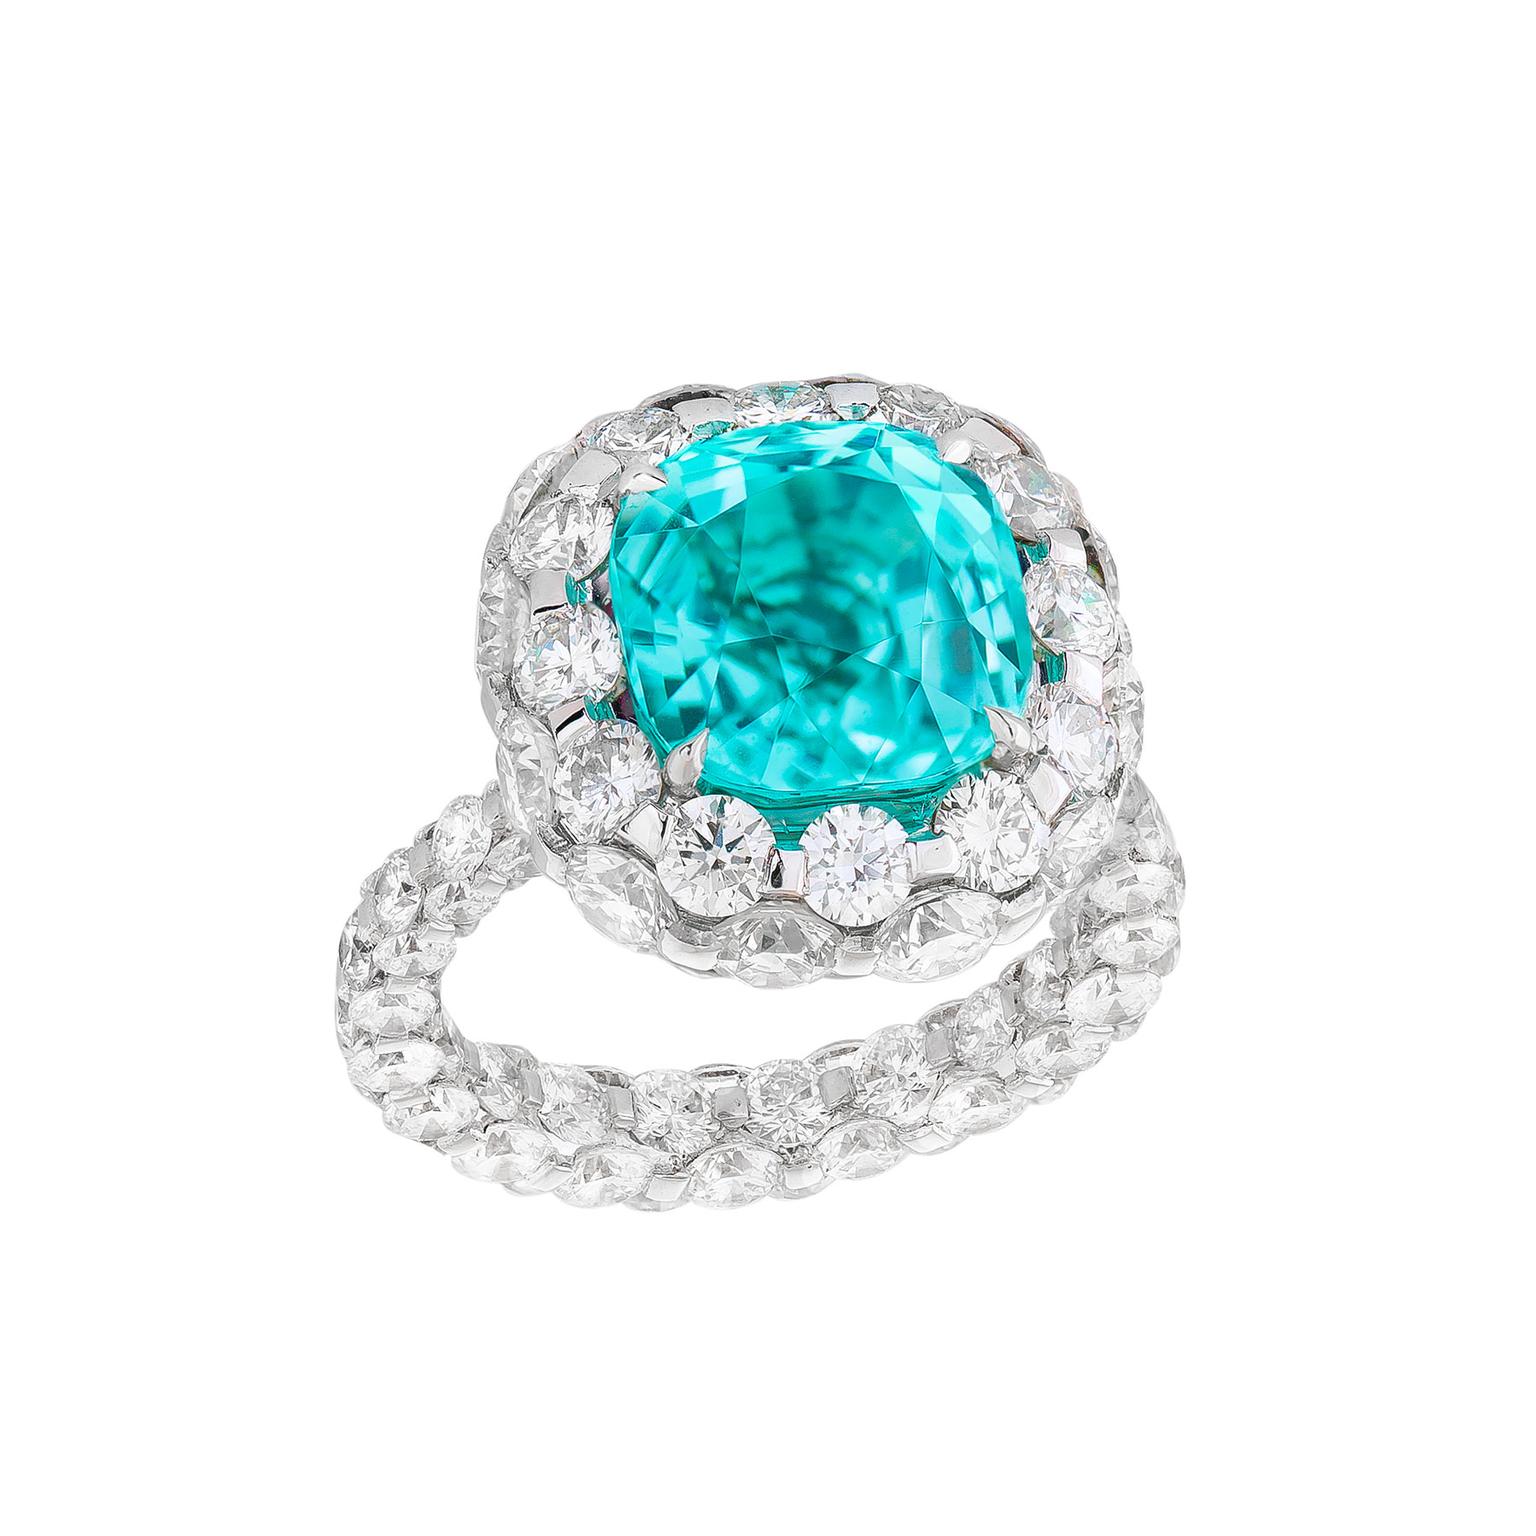 Boghossian Les Merveilles Paraiba toumaline ring with diamonds 